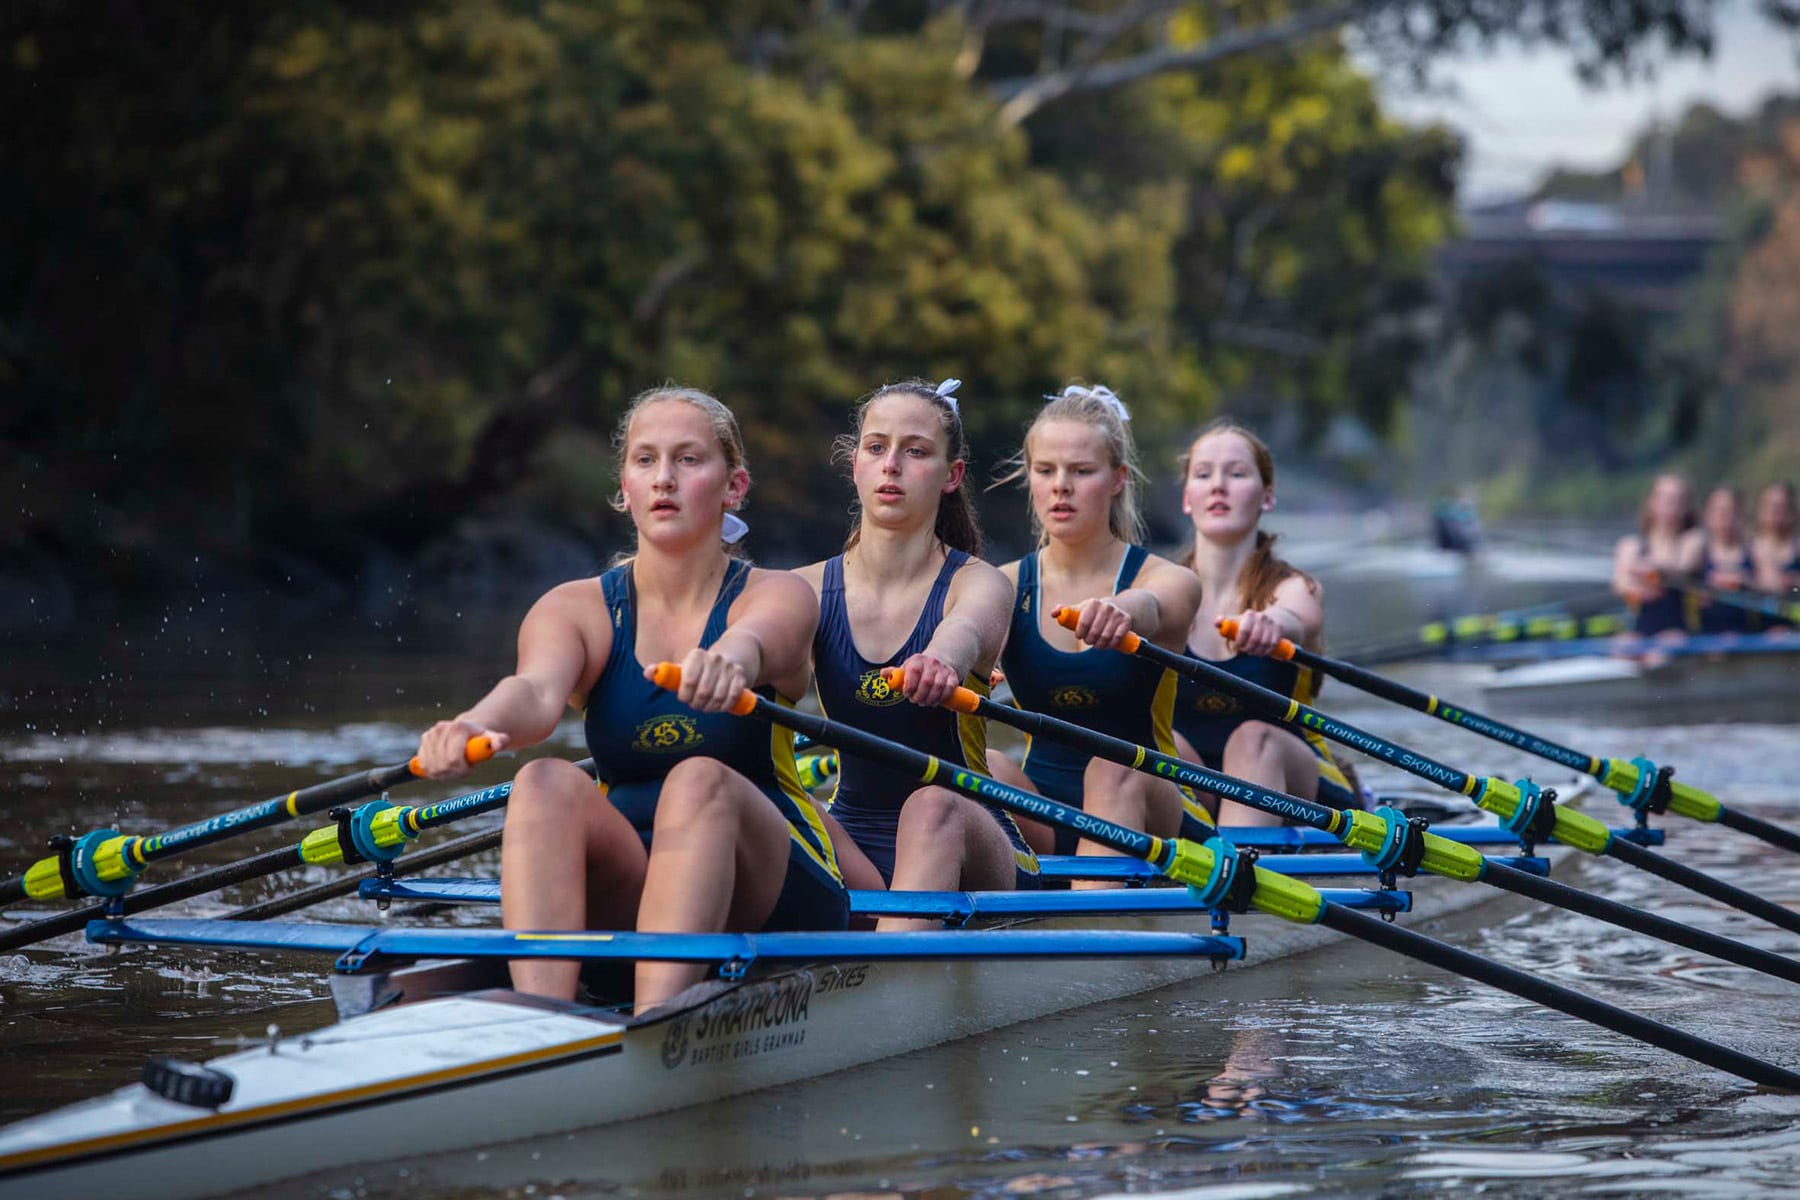 Strathcona girls rowing